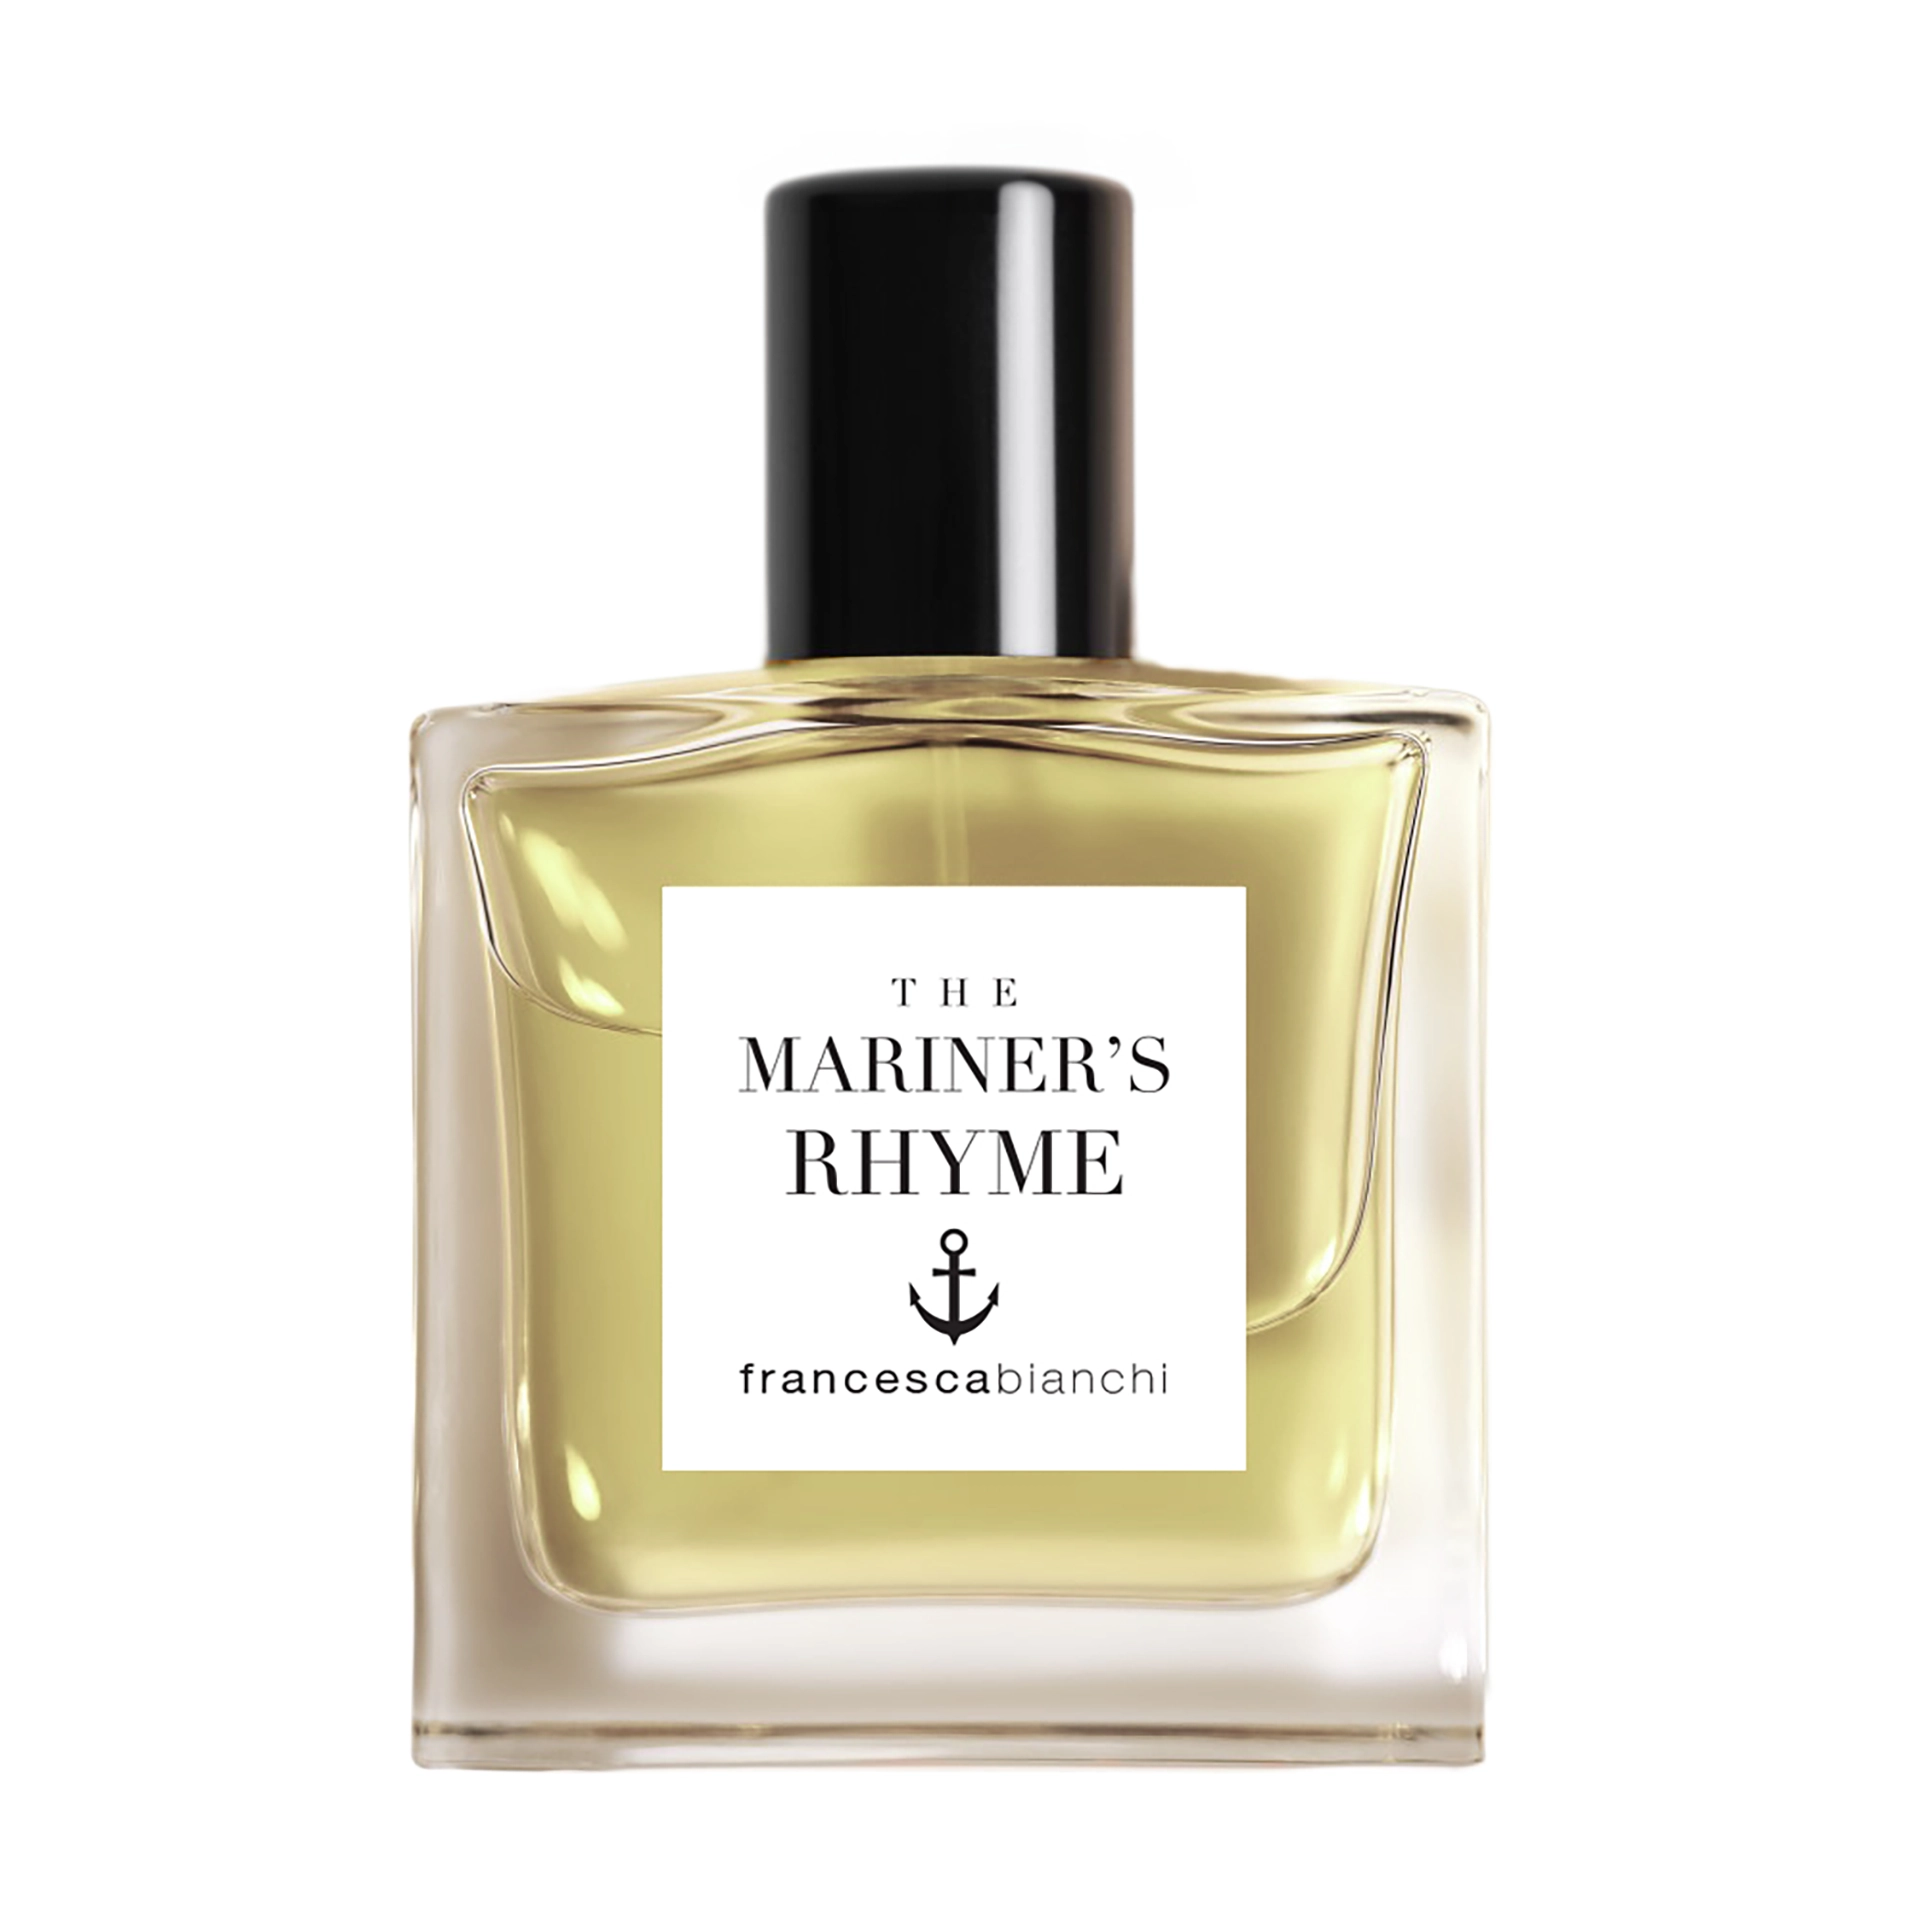 the mariners rhyme francesca bianchi daring light perfumes niche barcelona copia - The Mariner's Rhyme